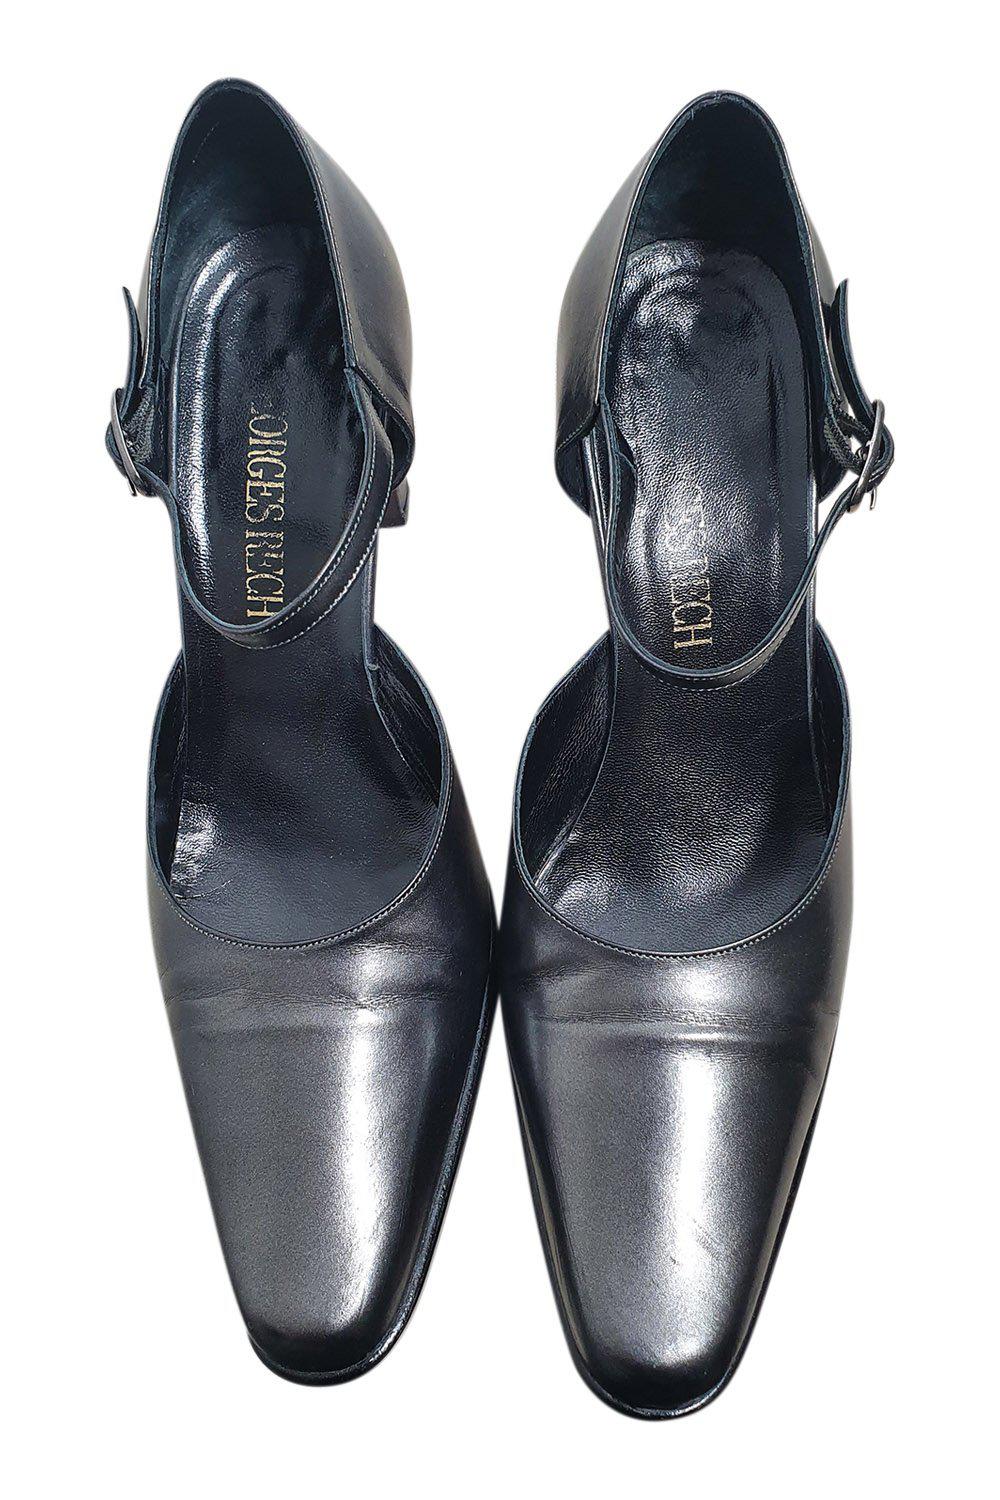 GEORGES RECH Vintage Black Ankle Strap Court Shoes (39)-The Freperie